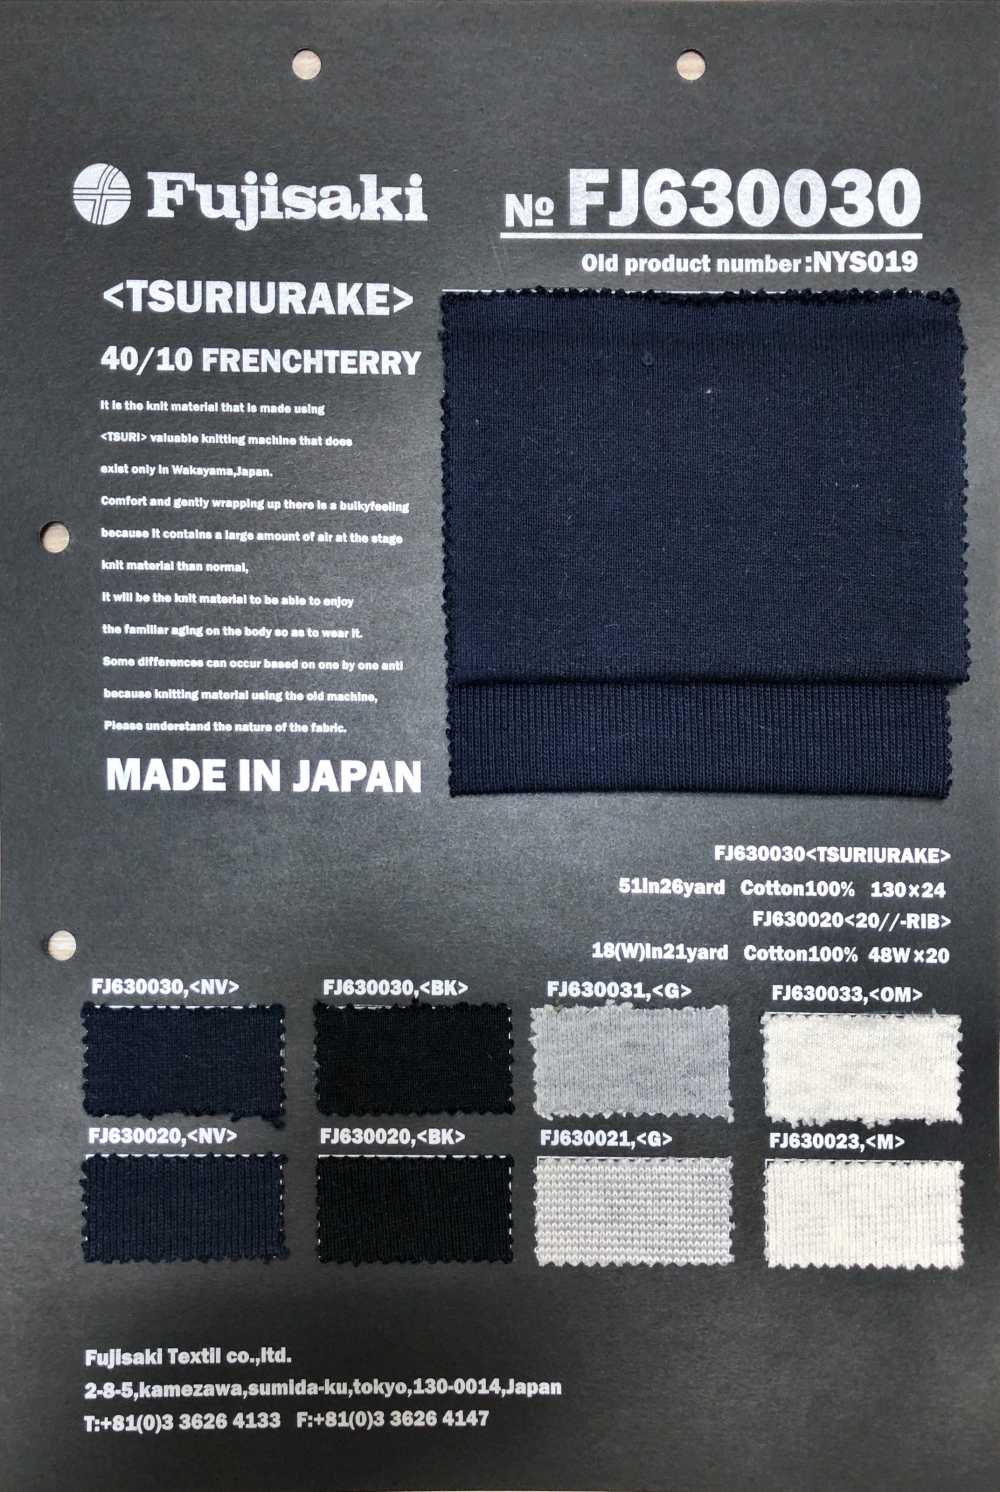 FJ630021 20//-針織羅紋石南花[面料] Fujisaki Textile